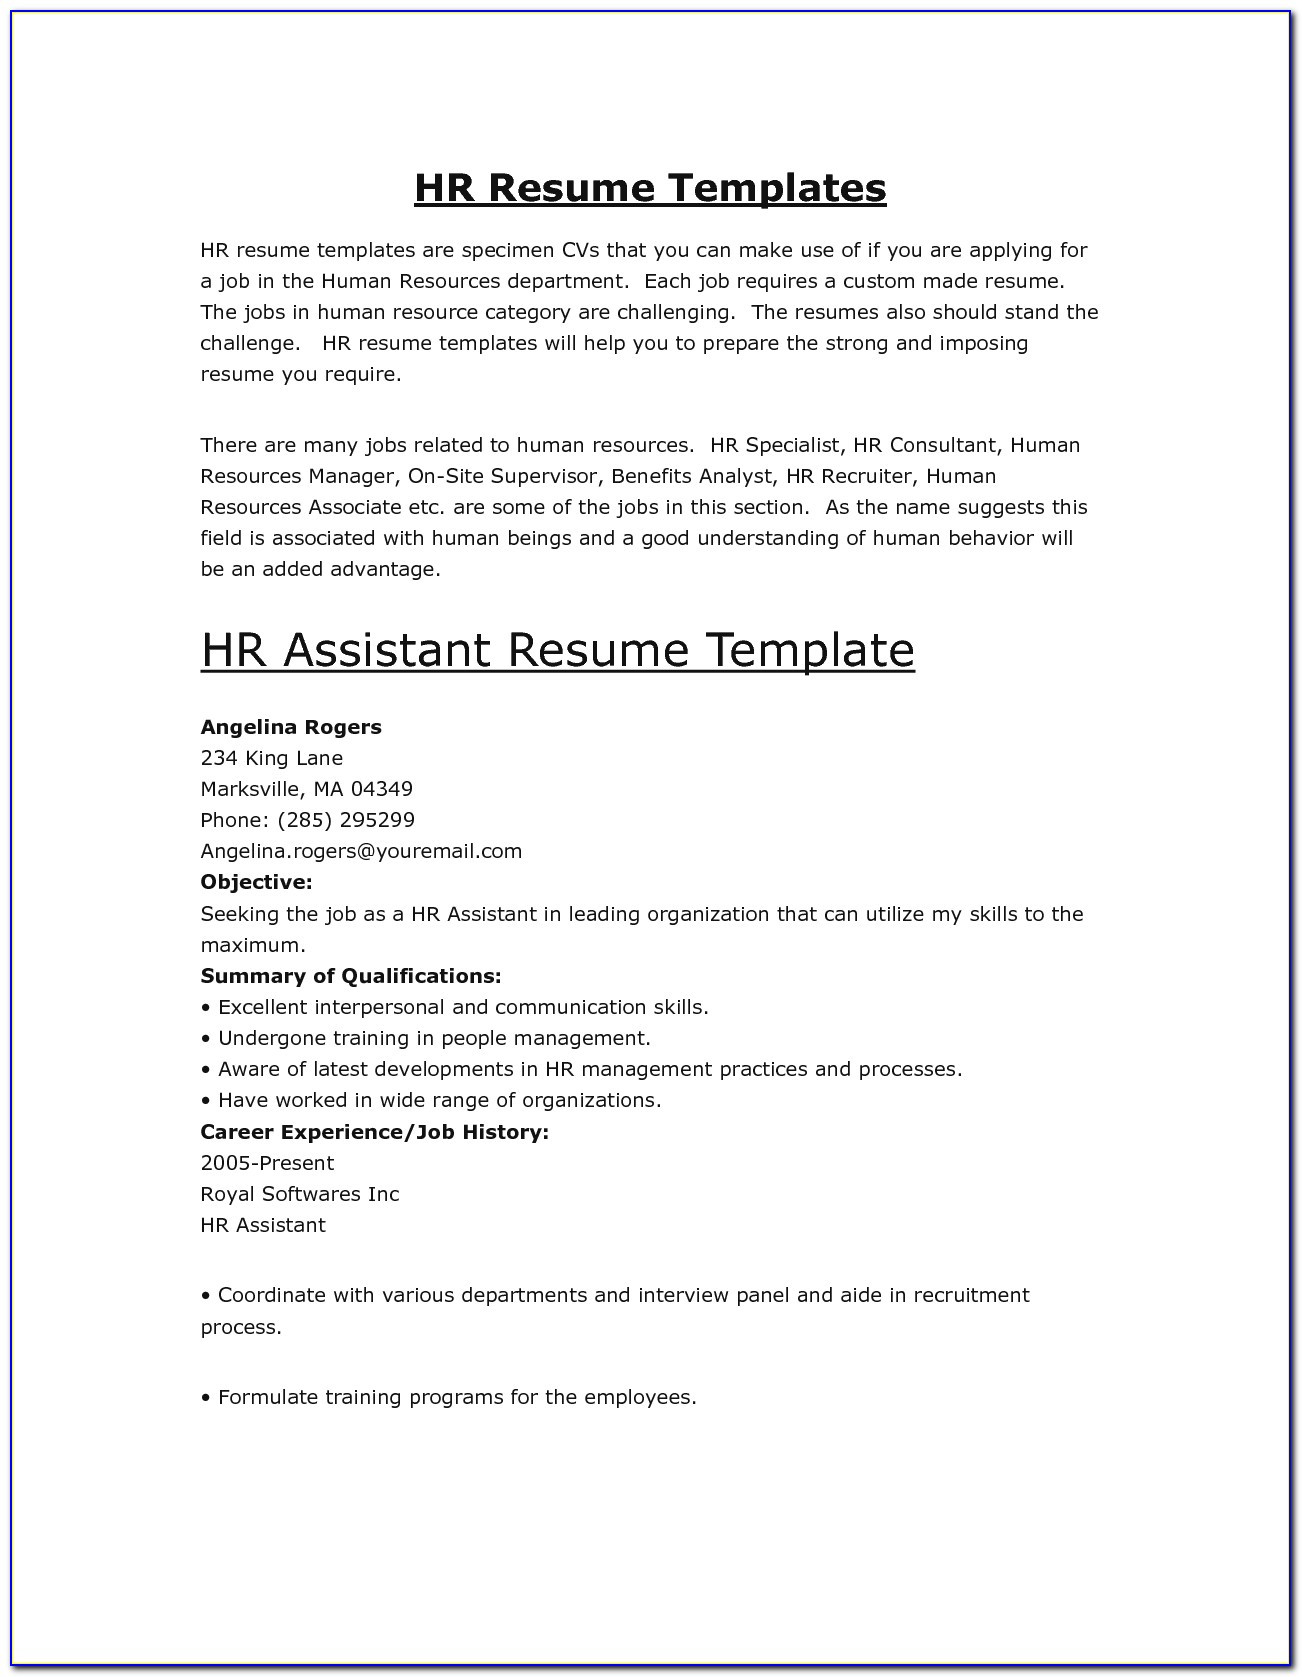 Sample Resume for Hr assistant Fresh Graduate Hr assistant Resume Sample – Just for the Taste Of Resume Sample